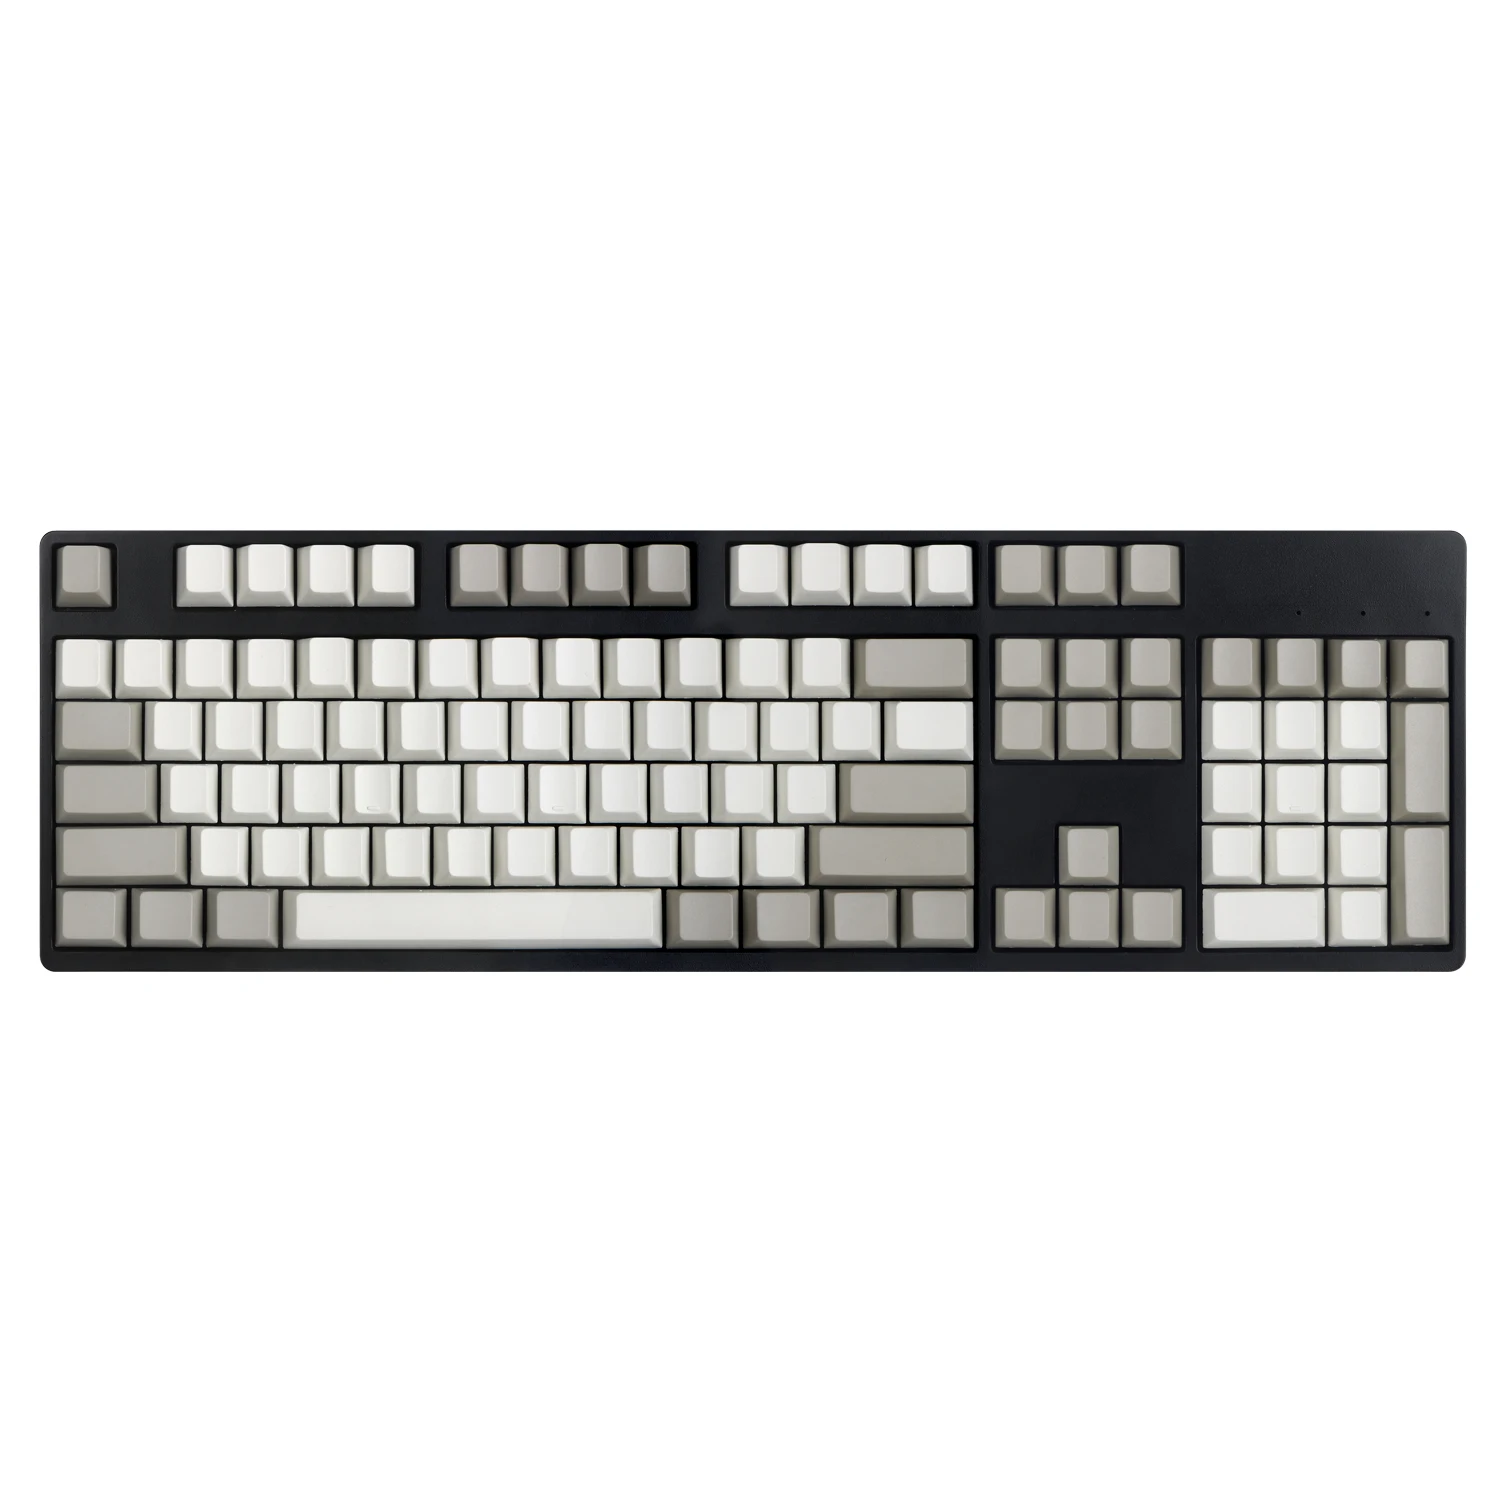 Enjoypbt mechanical keyboard keycaps 120 keycap thick PBT blank print cherry profile 104 keyboard keys retro 4 - Pudding Keycap